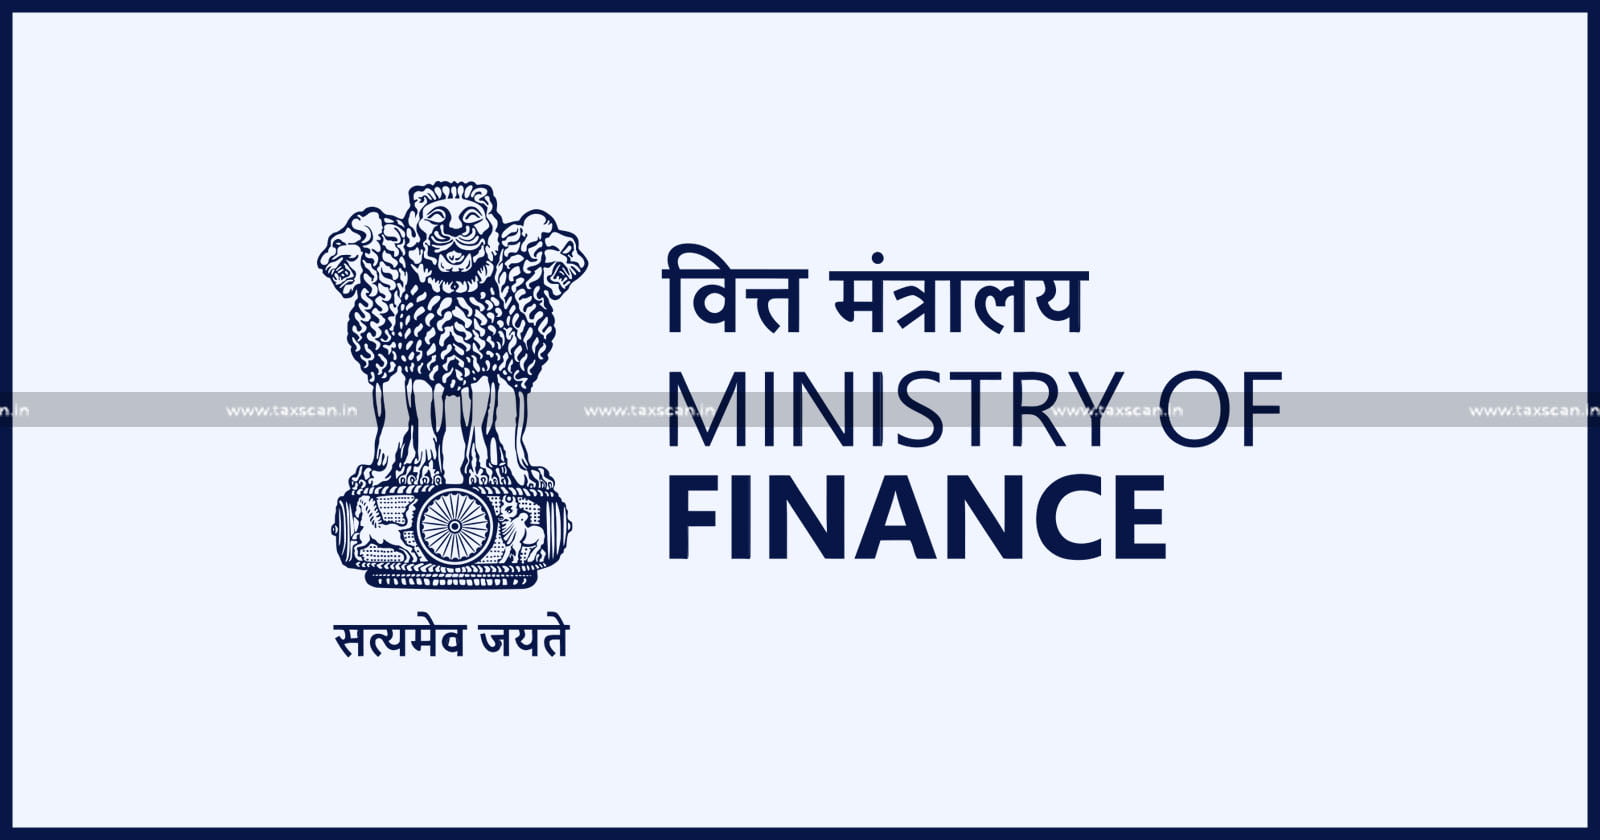 Finance Ministry - Commissionerate-Level Monitoring by CBDT - CBDT - CBIC - CBIC Officers - Assets - taxscan